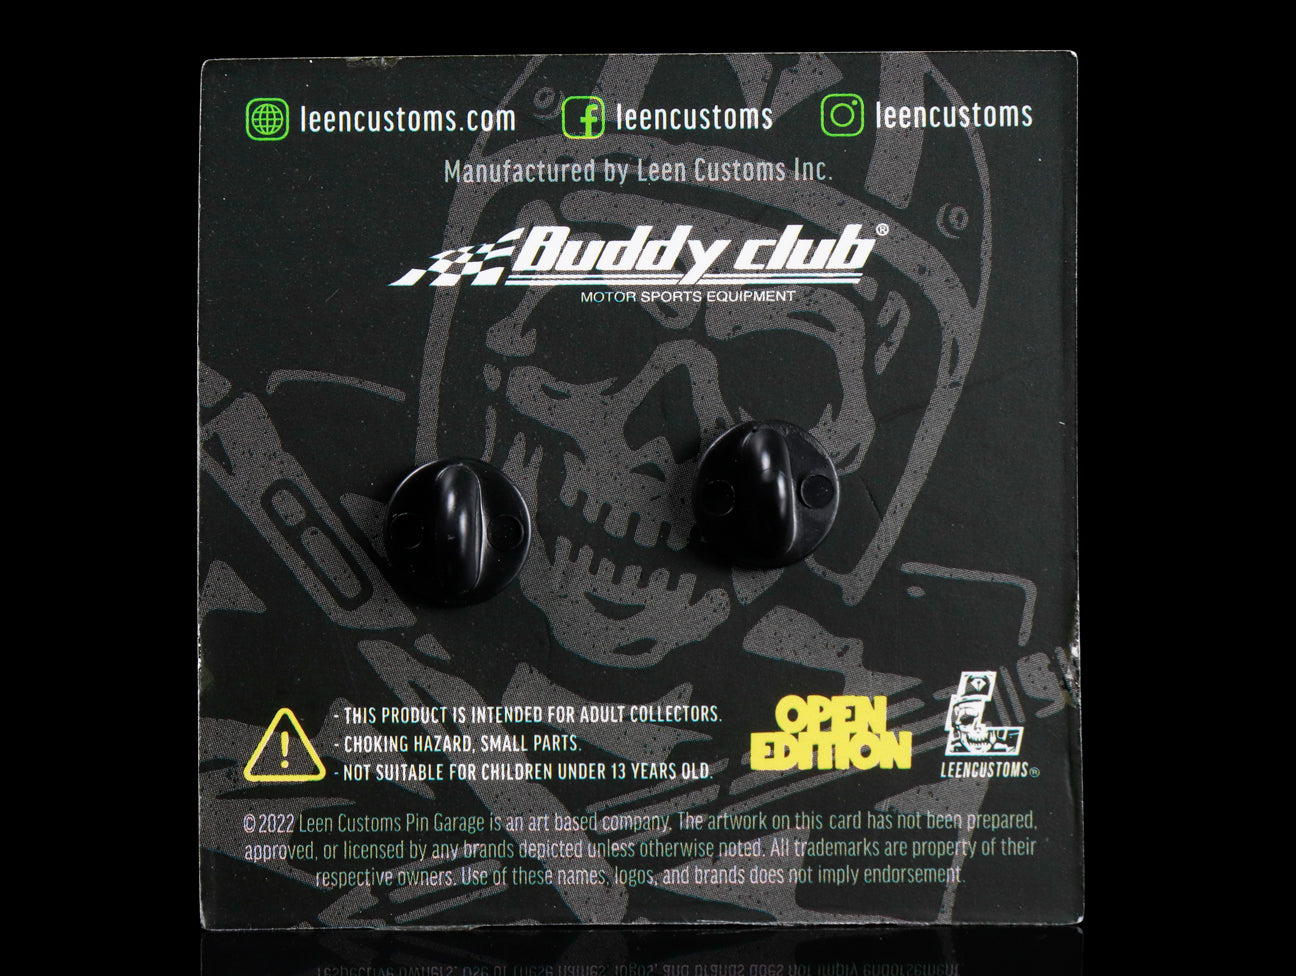 Buddy Club x Leen Customs Lapel Pin